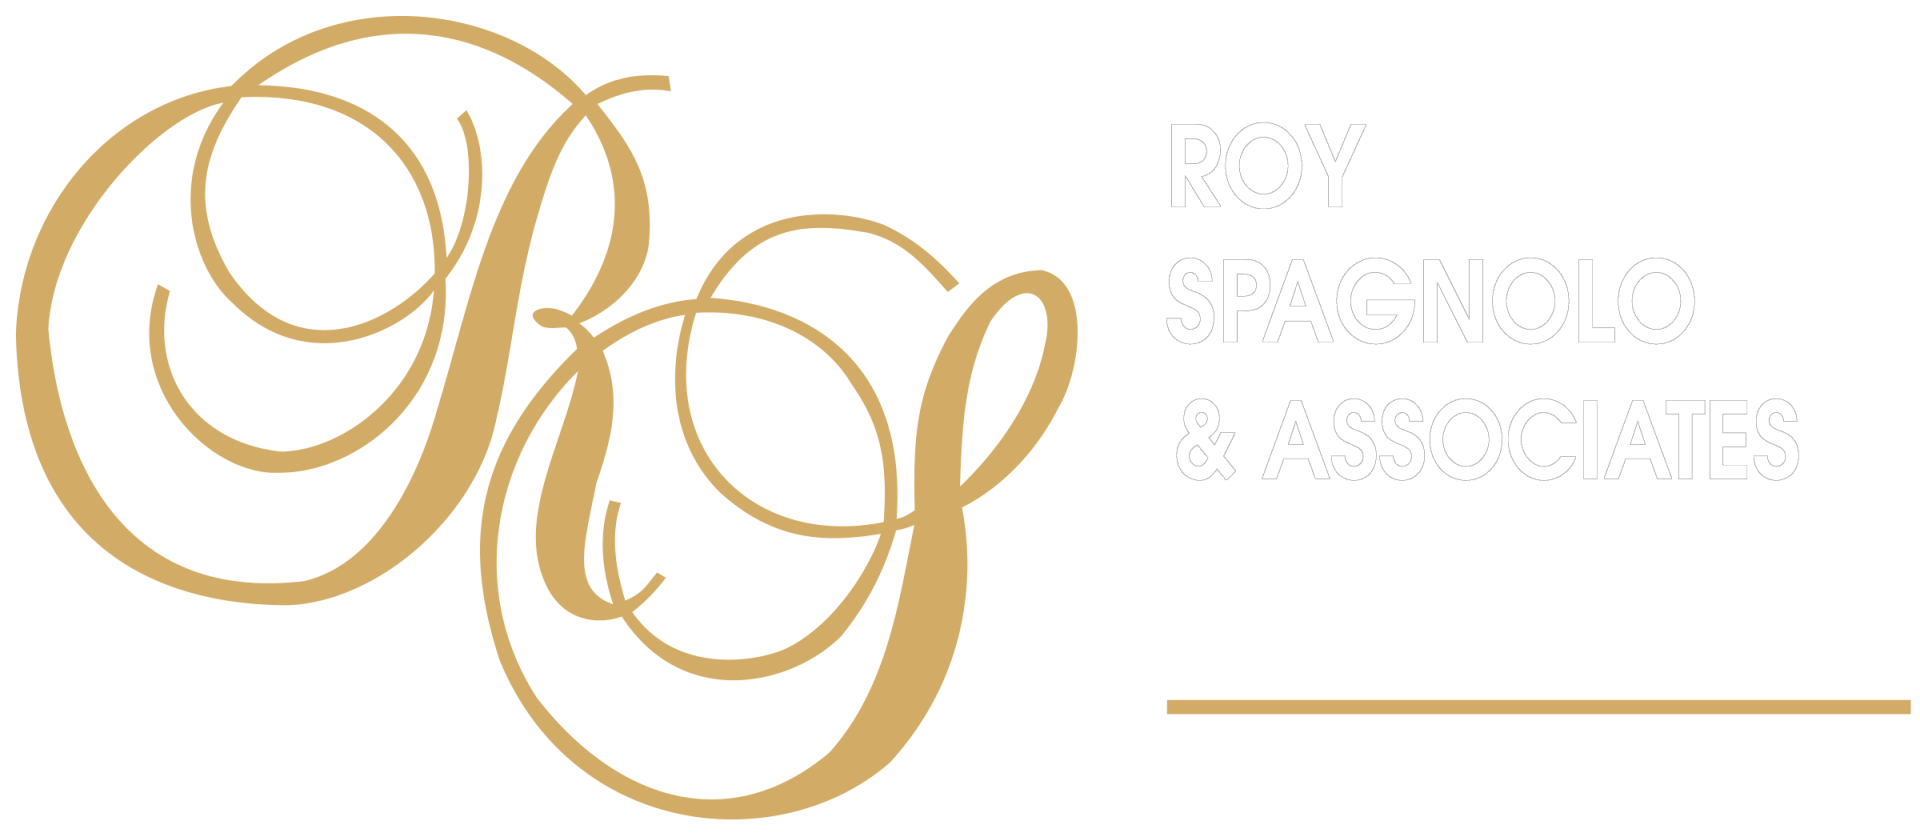 Roy Spagnolo & Associates, business advisors & accountants for liquor, hospitality, mining, farming, Griffith & Sydney